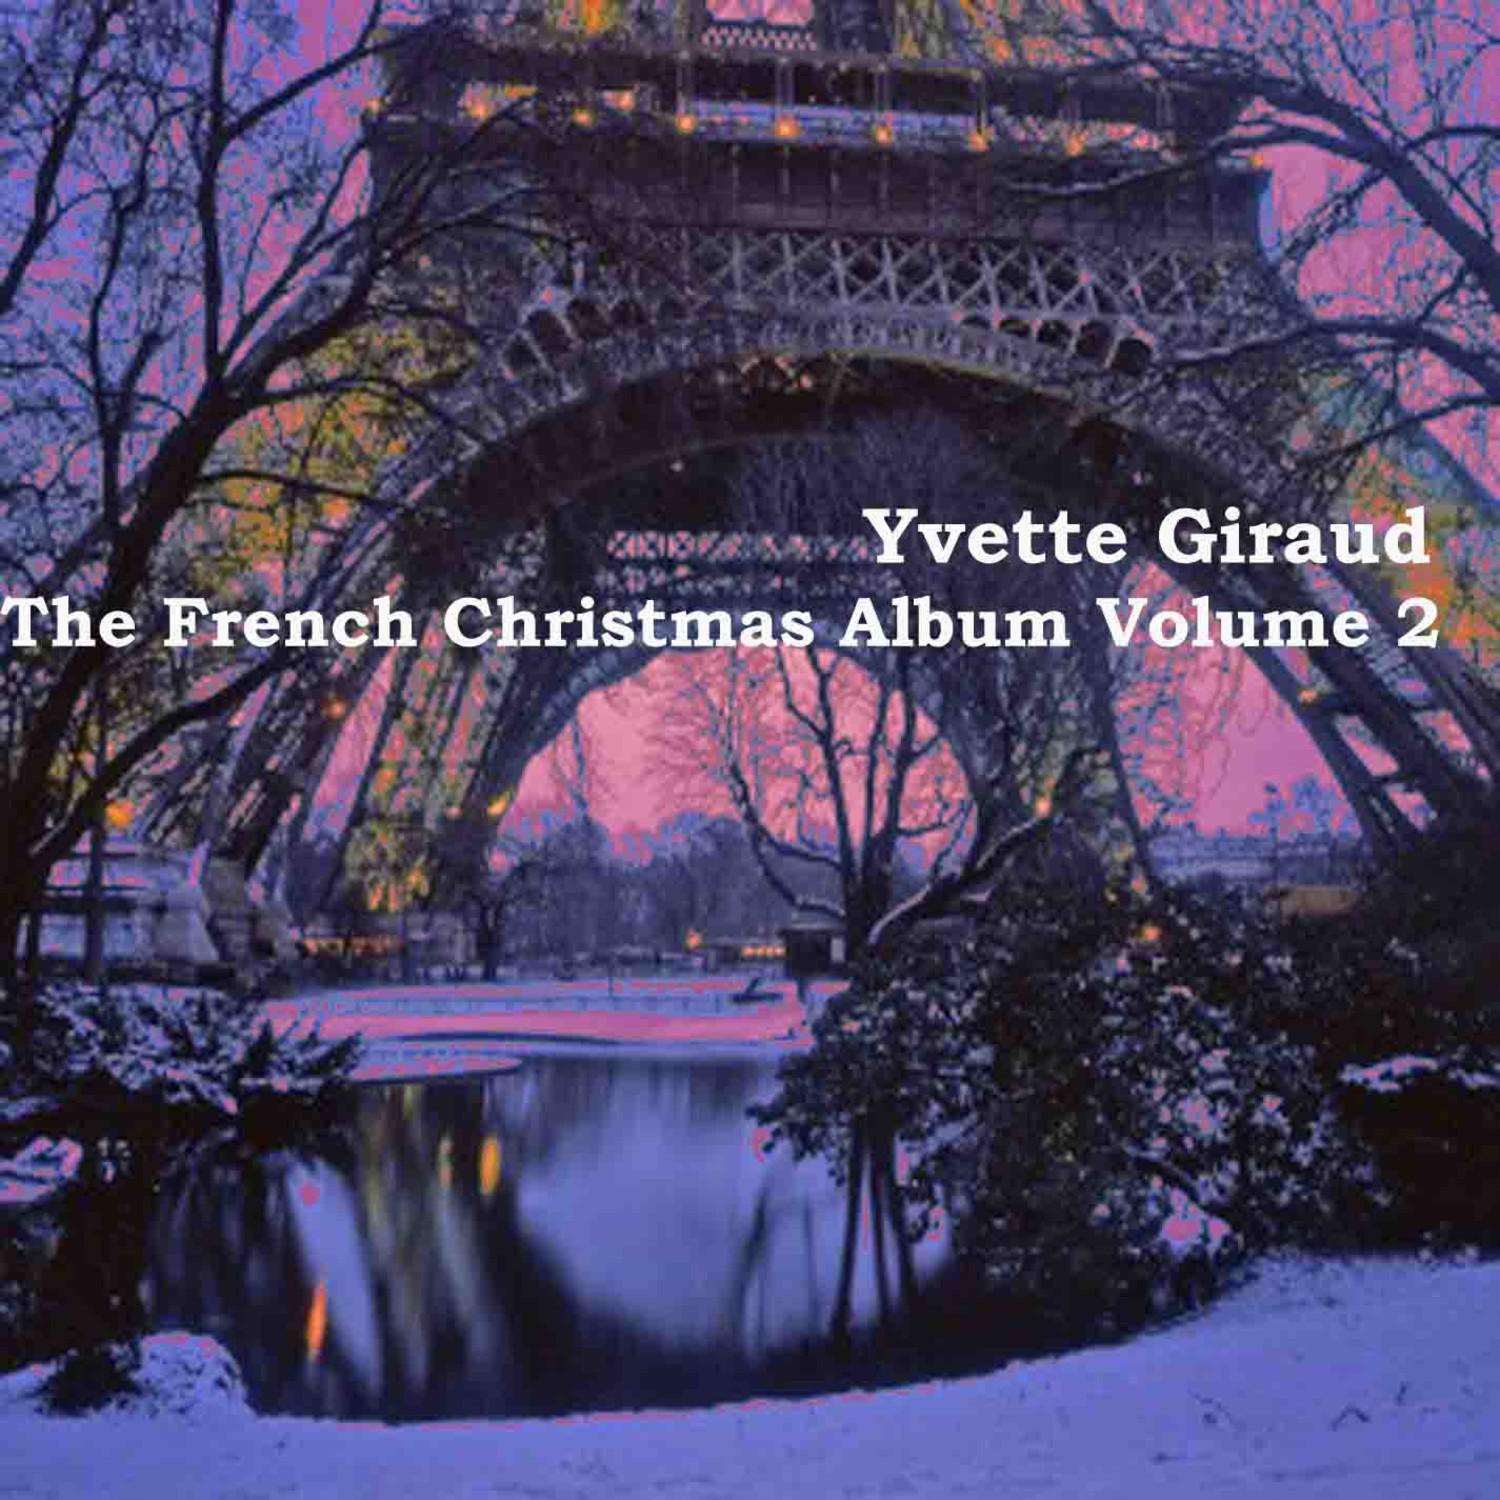 The French Christmas Album Volume 2